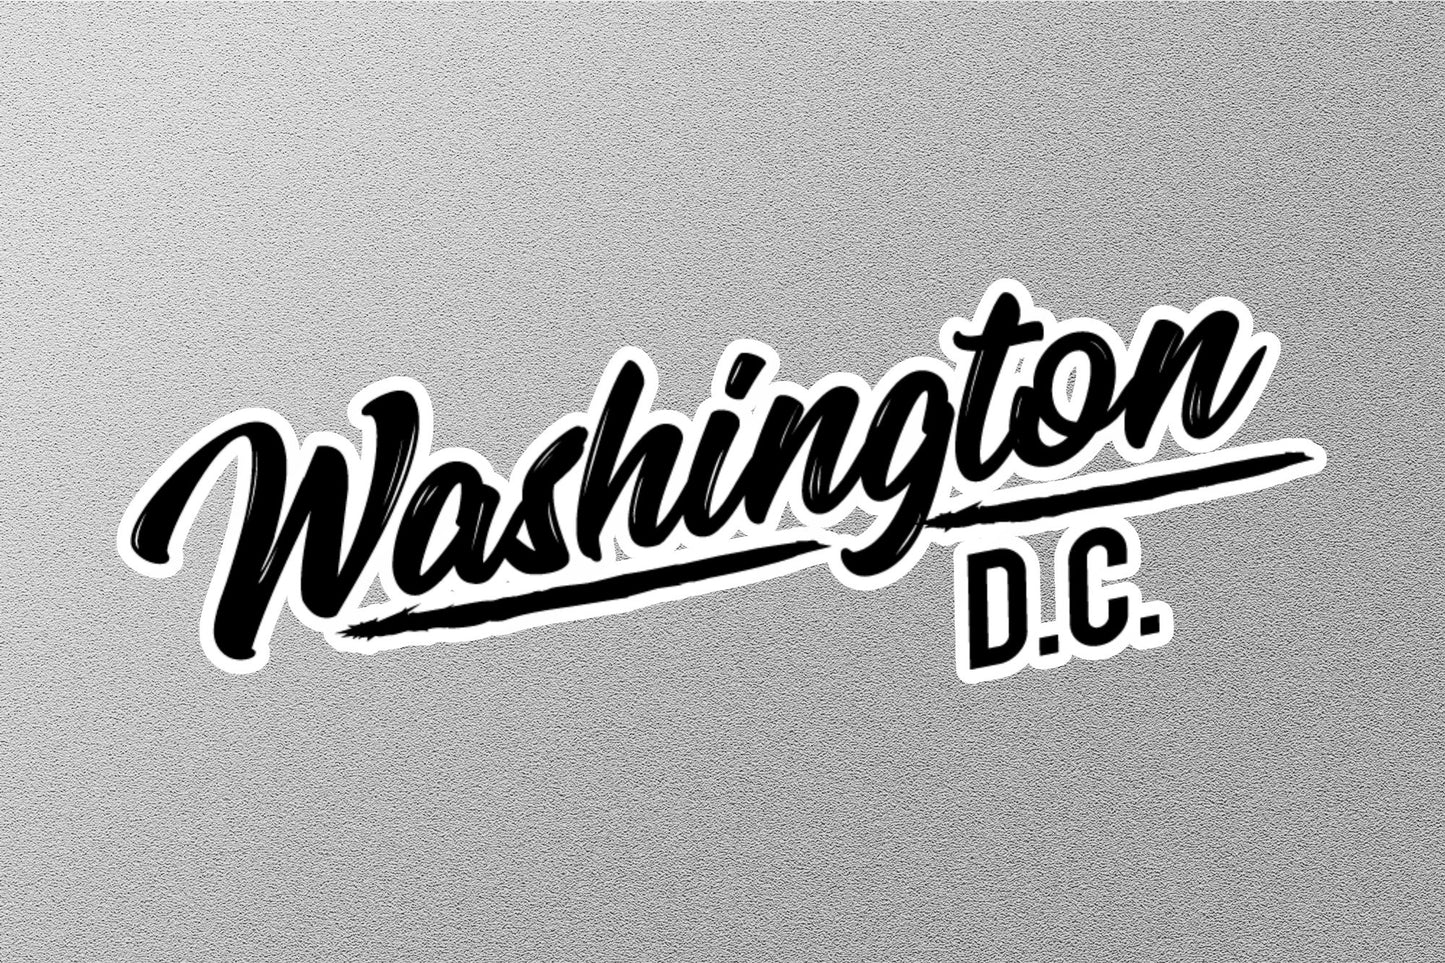 Washington D.C Sticker